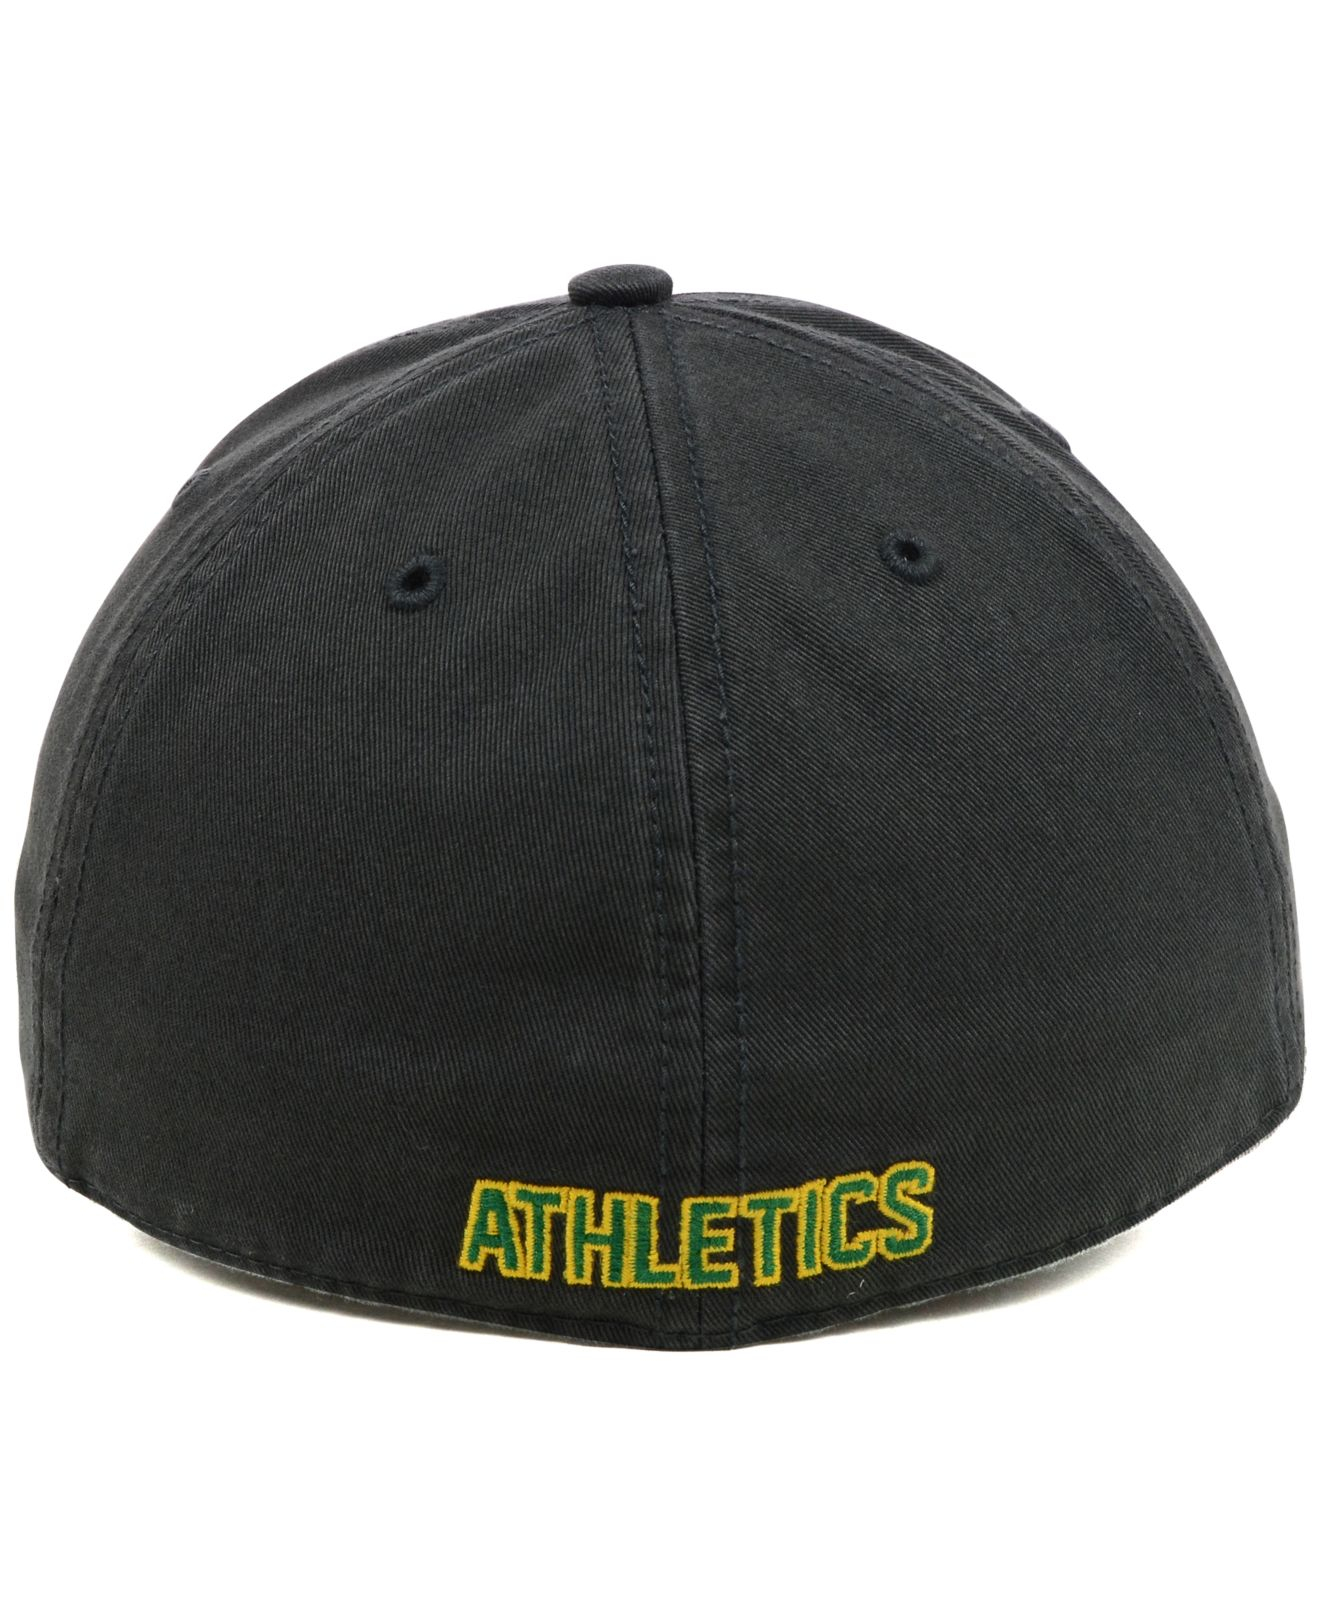 Buy Houston Astros 47 MLB VIP FRANCHISE Cap Hat (Medium) Online at Low  Prices in India 